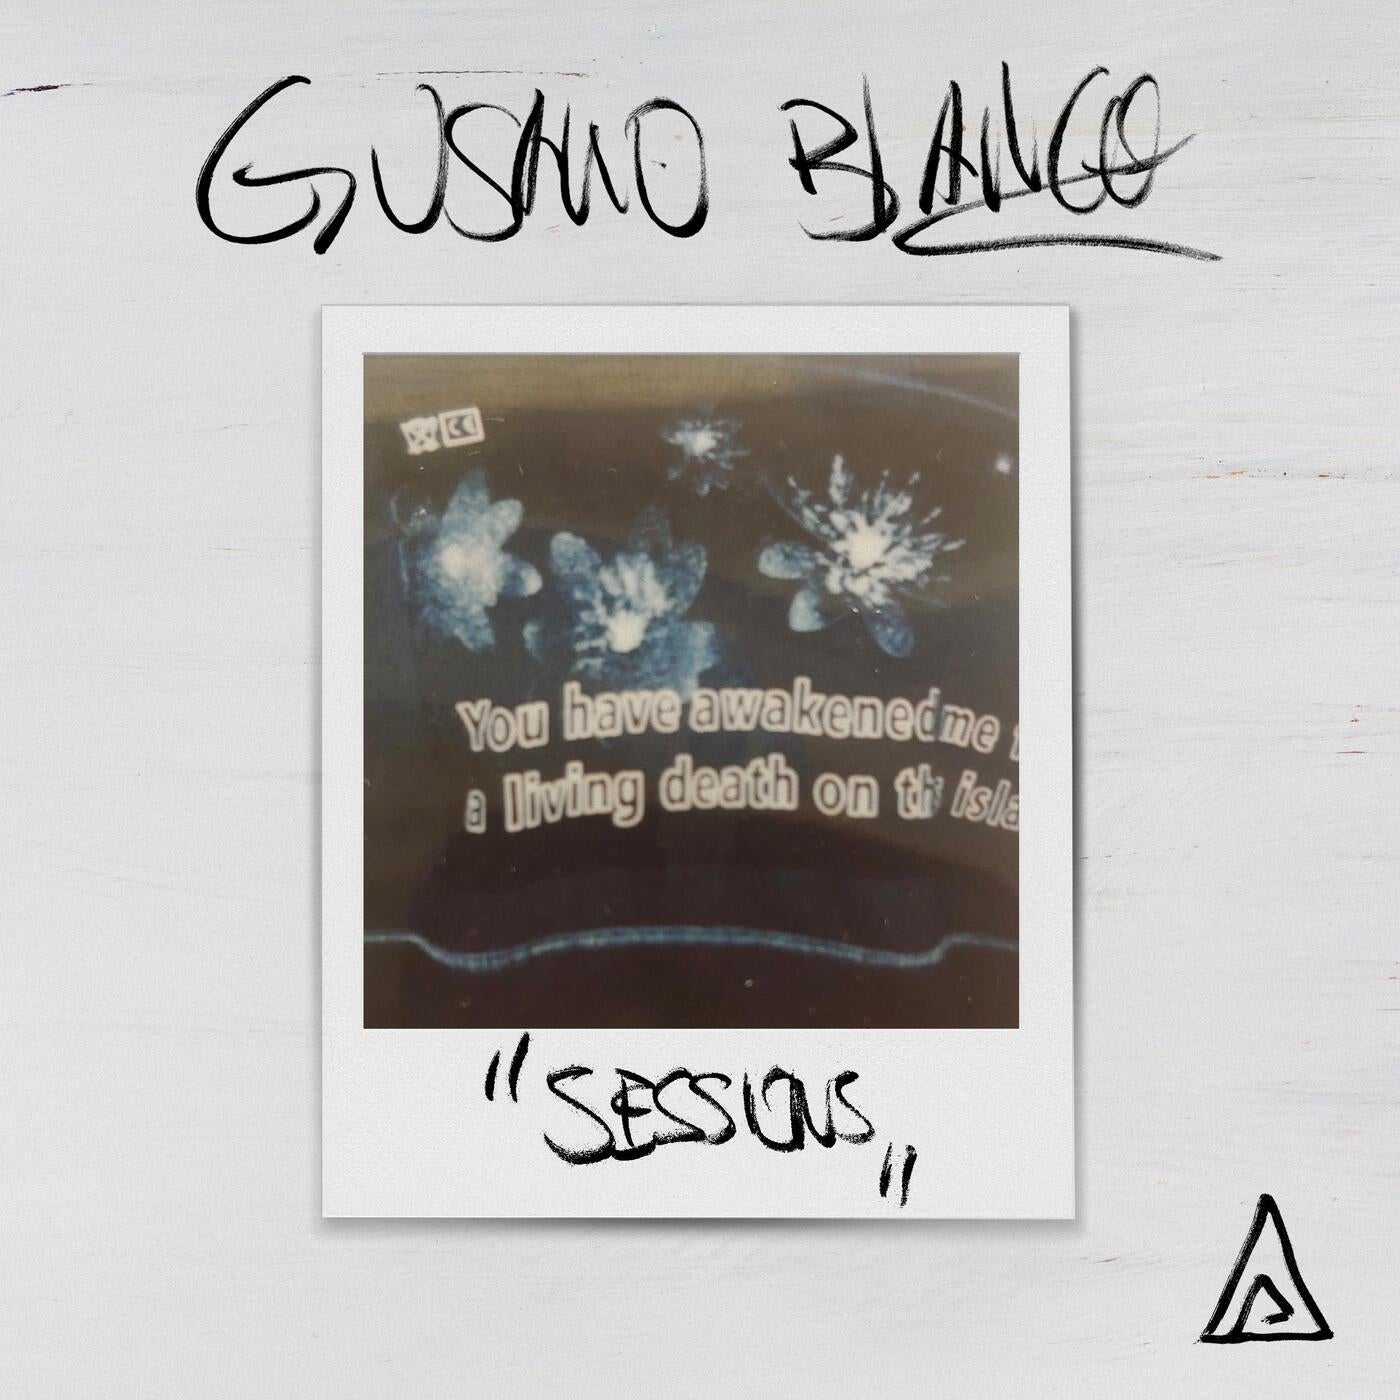 Gusano Blanco Sessions